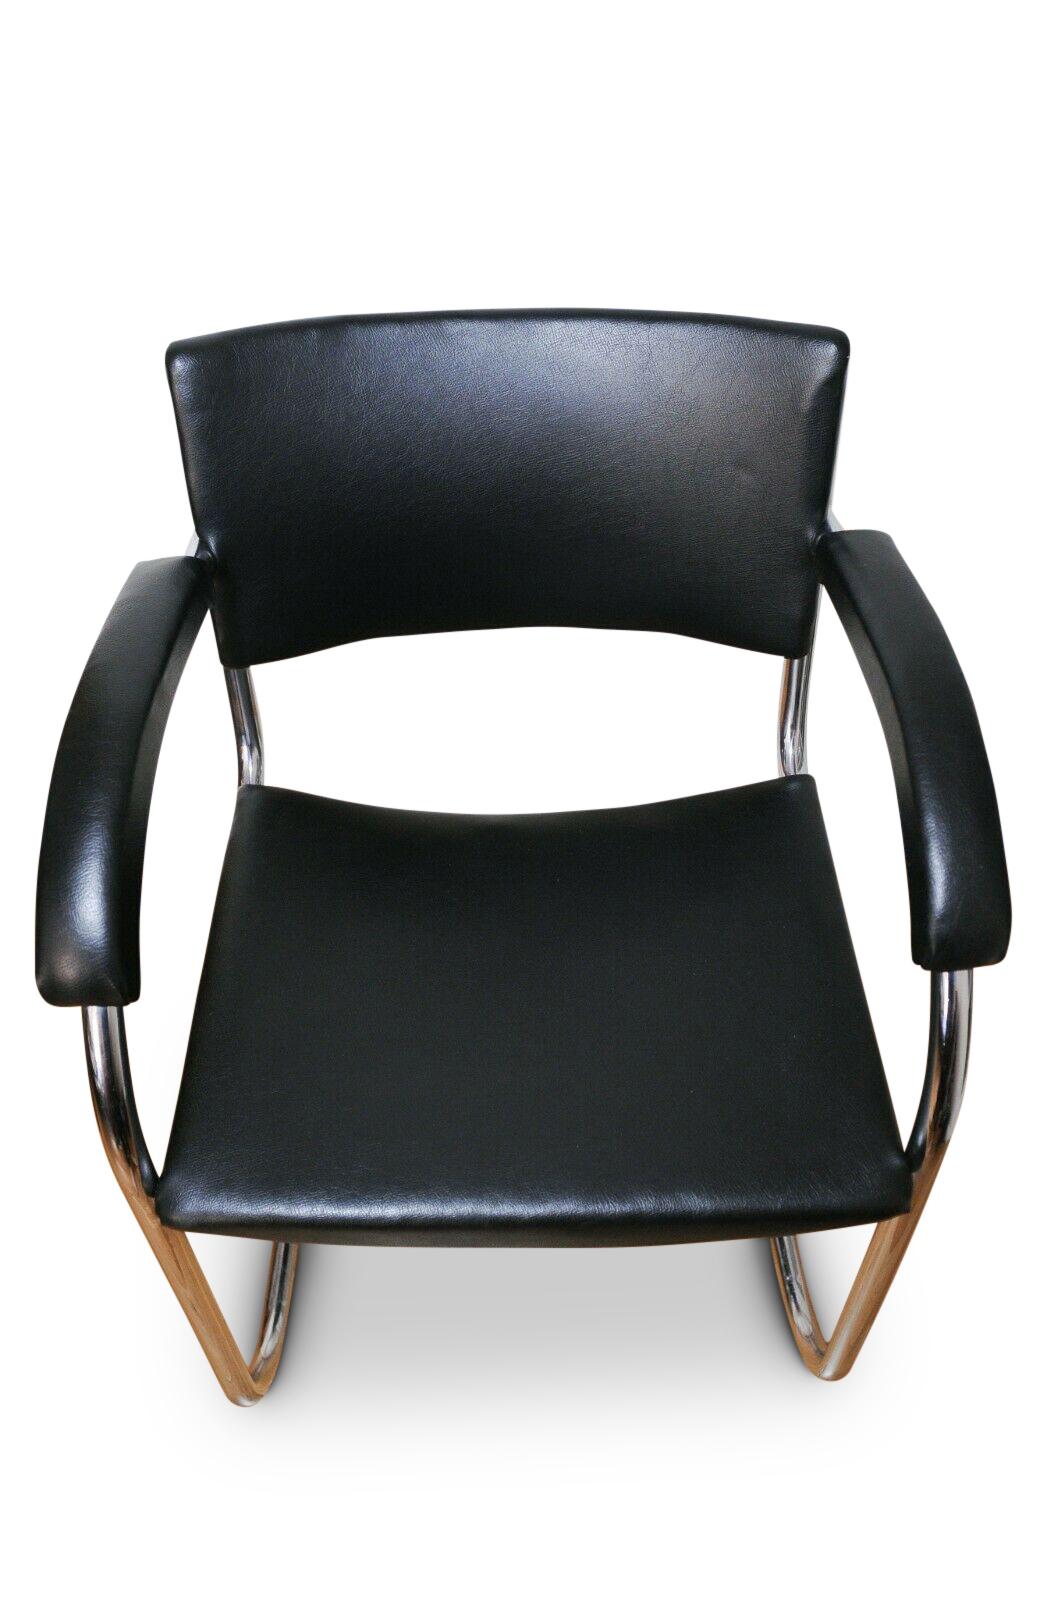 British Iconic SP9 Chrome Cantilever Chair by PEL 'Practical equipment ltd' bauhaus For Sale